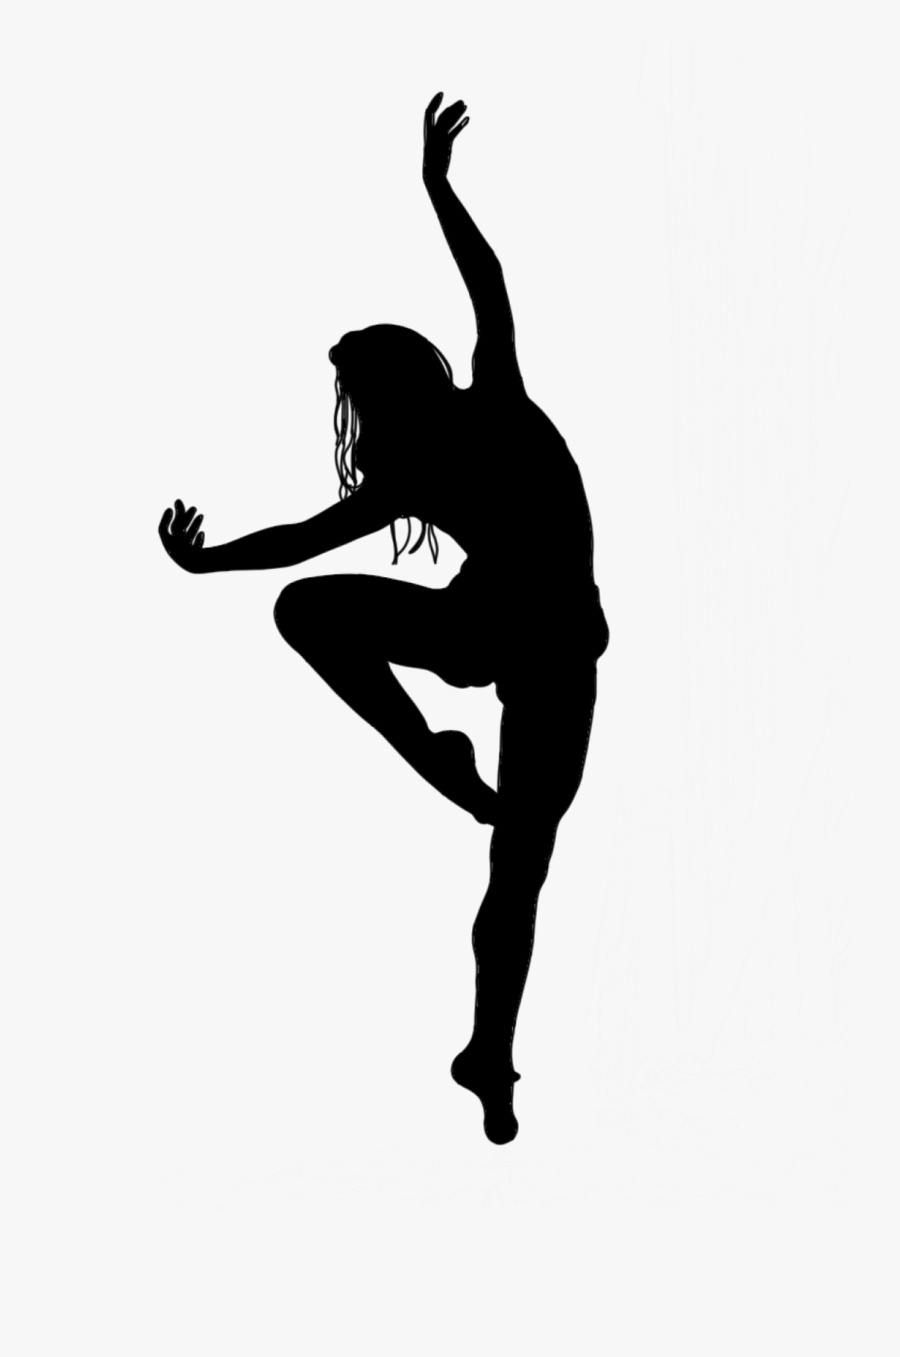 Download Free Illustration Of Ballet, Dancer, Silhouette, - Dancer Silhouette Png, Transparent Clipart